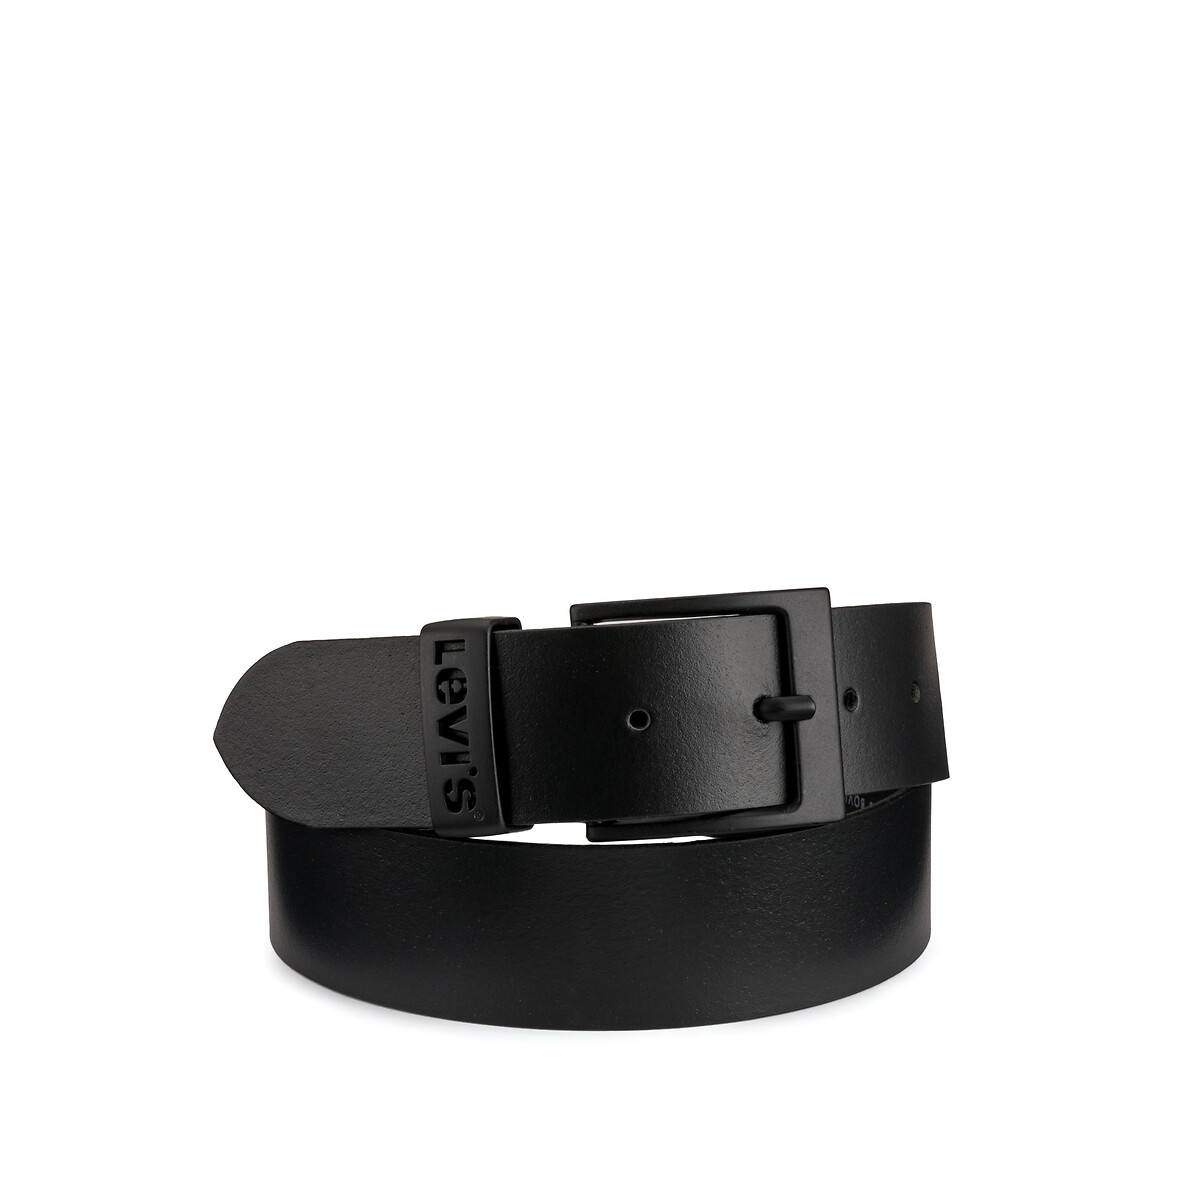 Ashland metal leather belt black Levi's | La Redoute